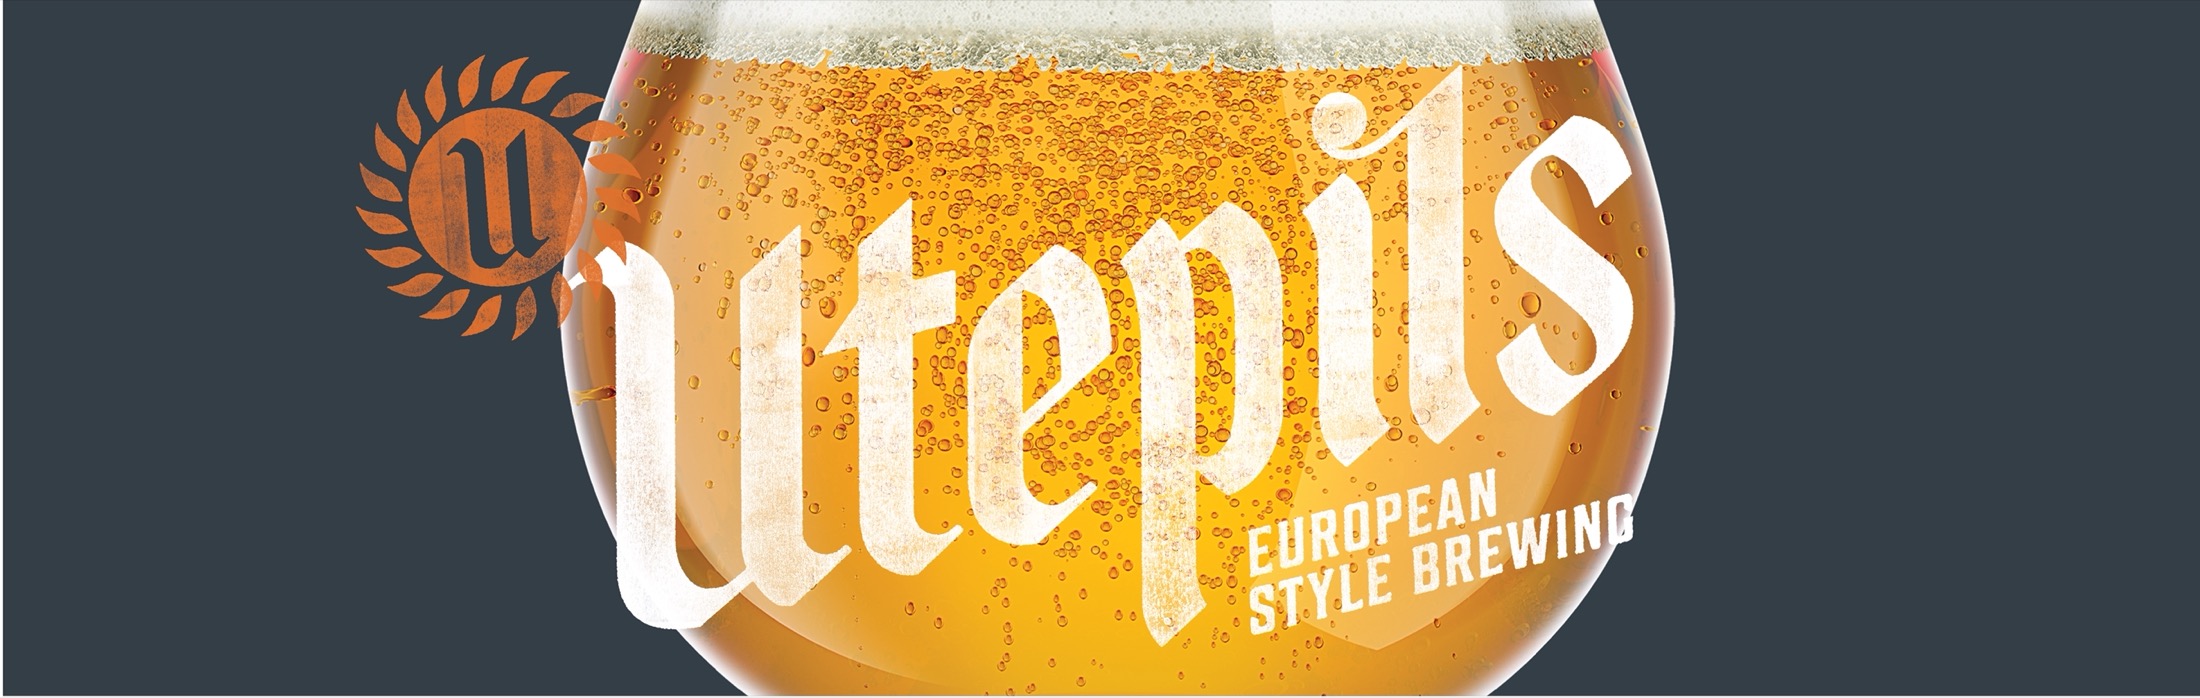 Utepils European Style Brewing